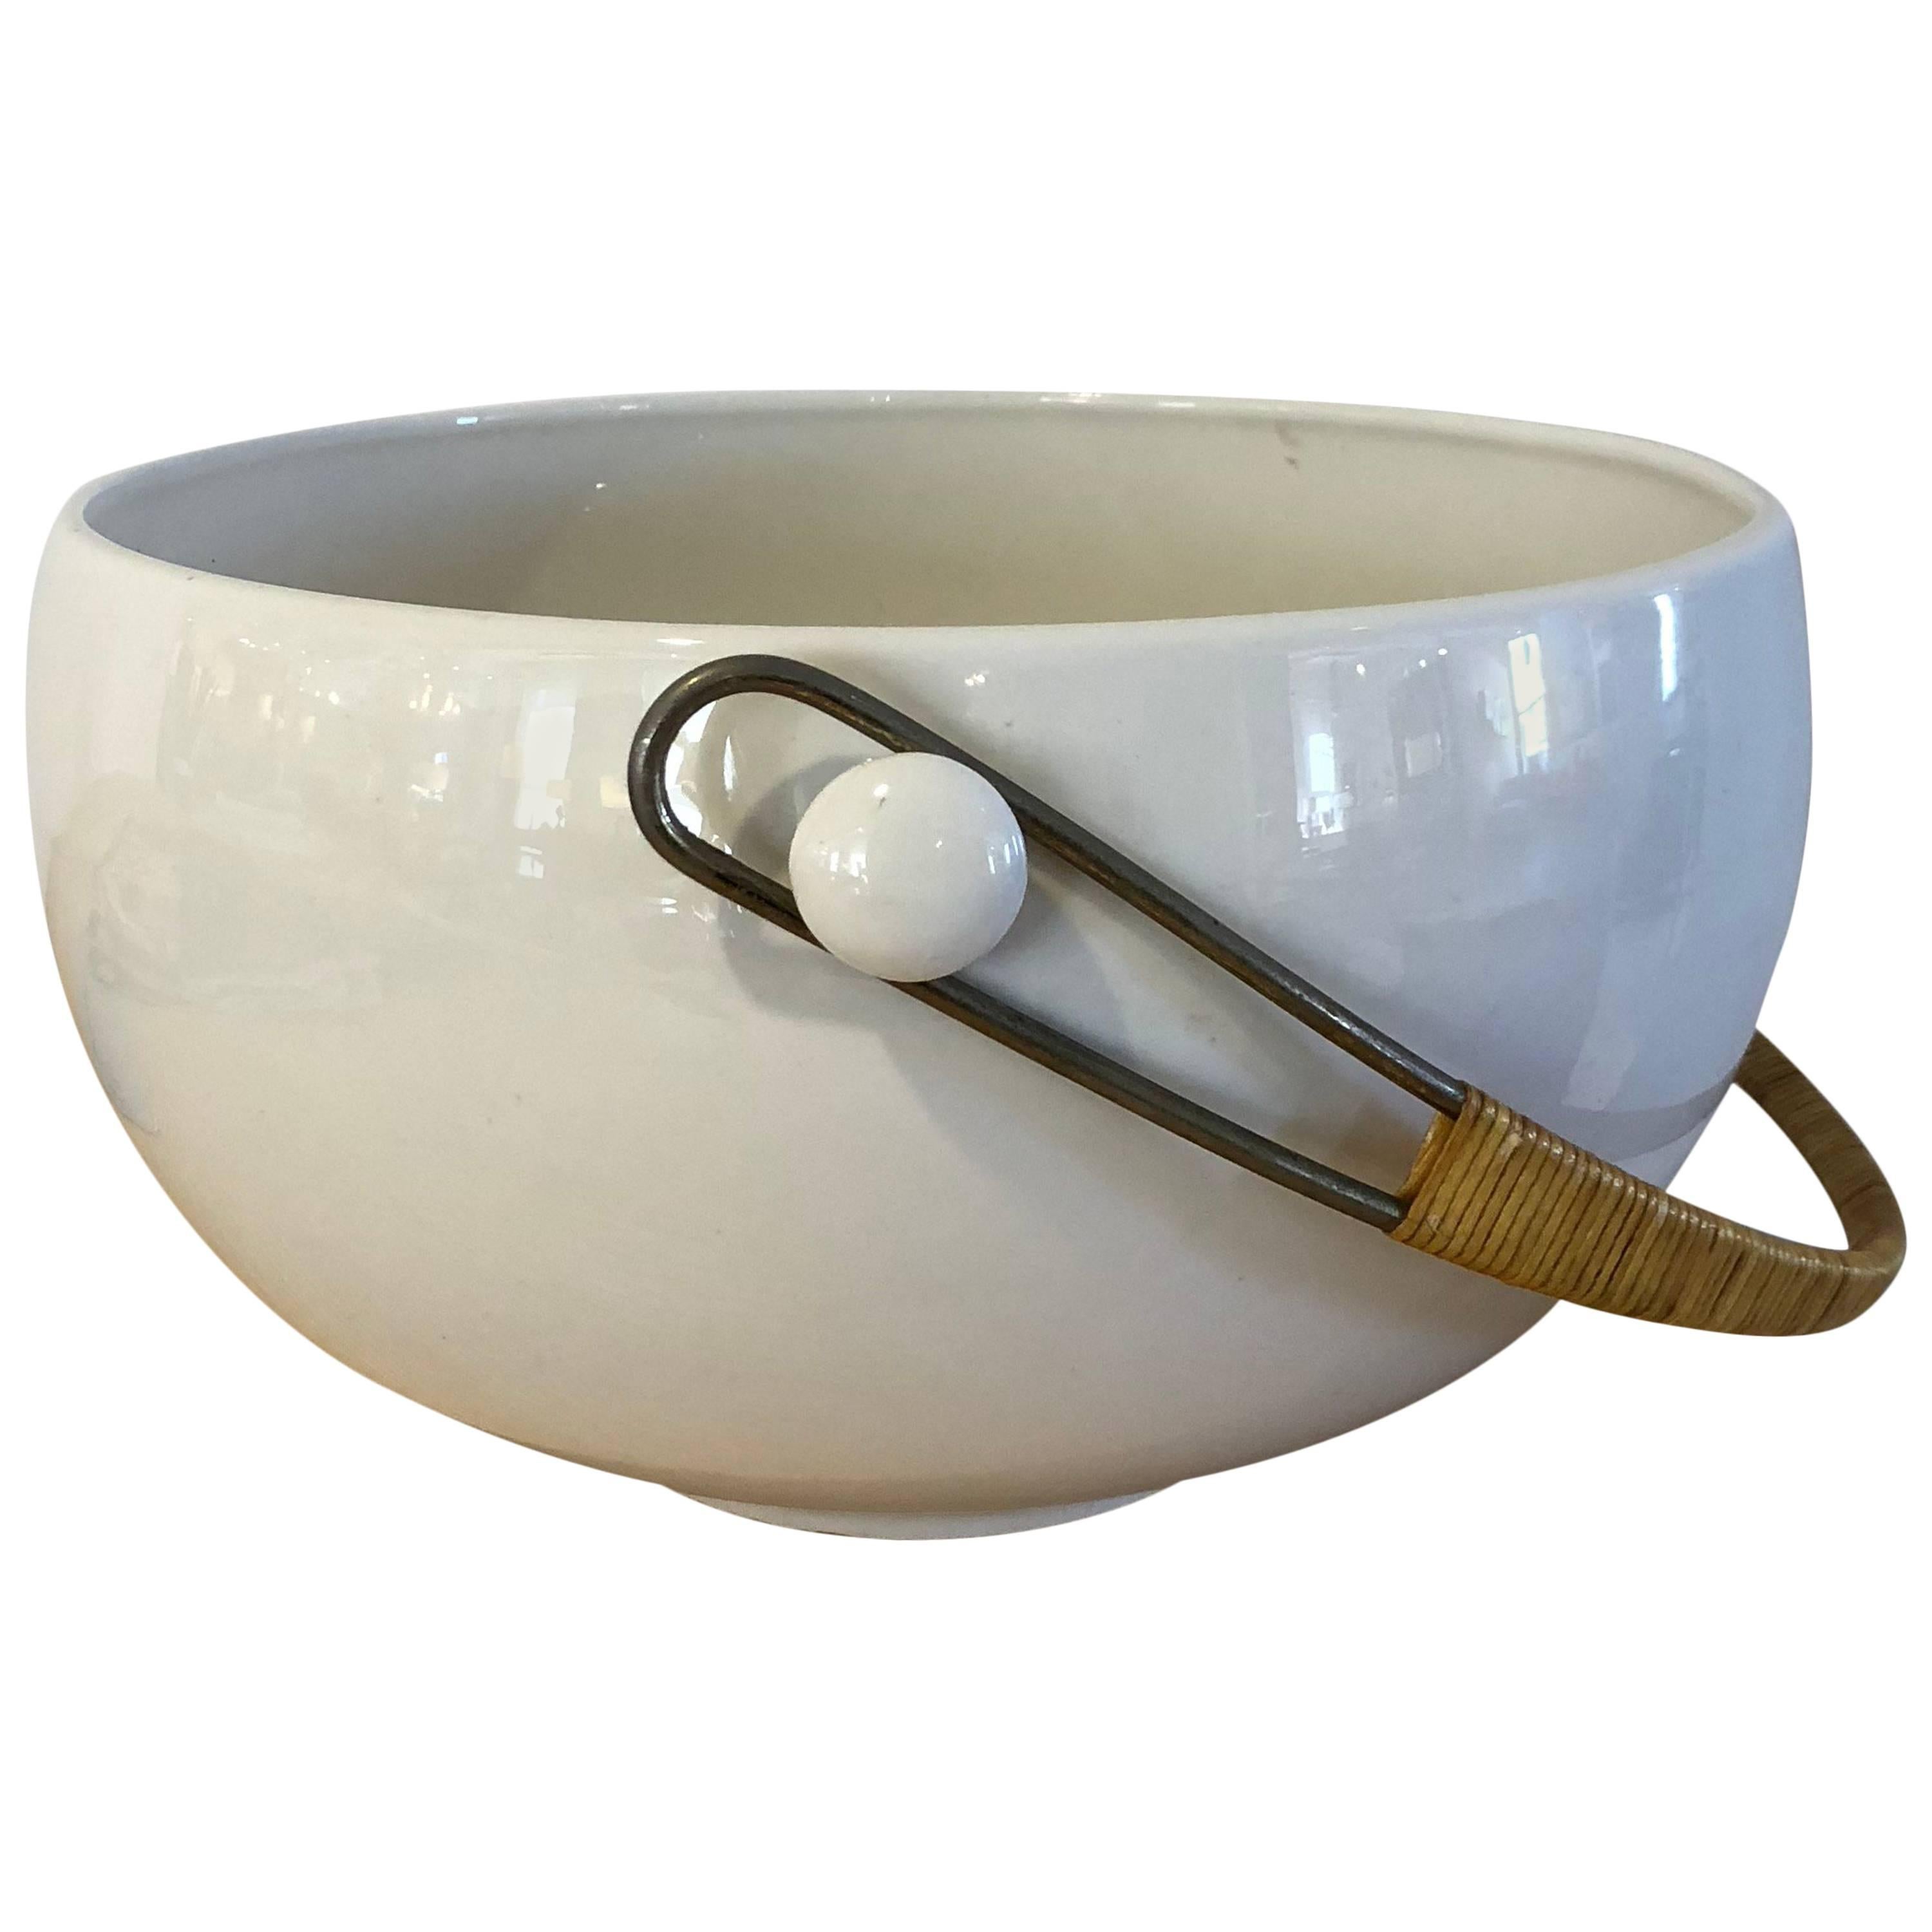 Decorative Ceramic and Cane Handled Bowl